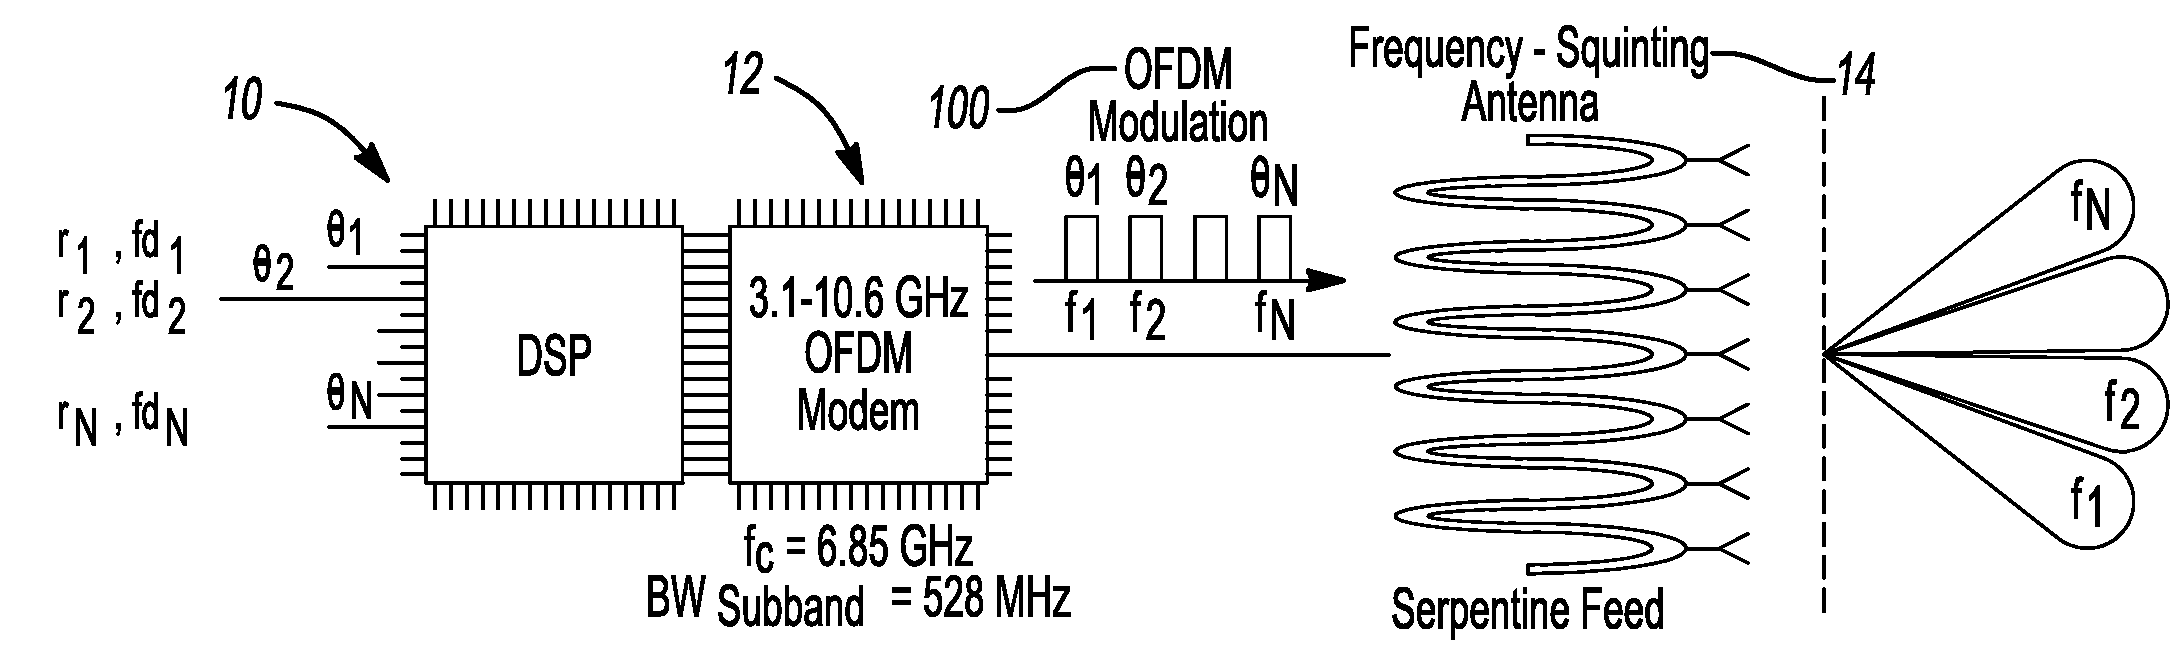 OFDM frequency scanning radar